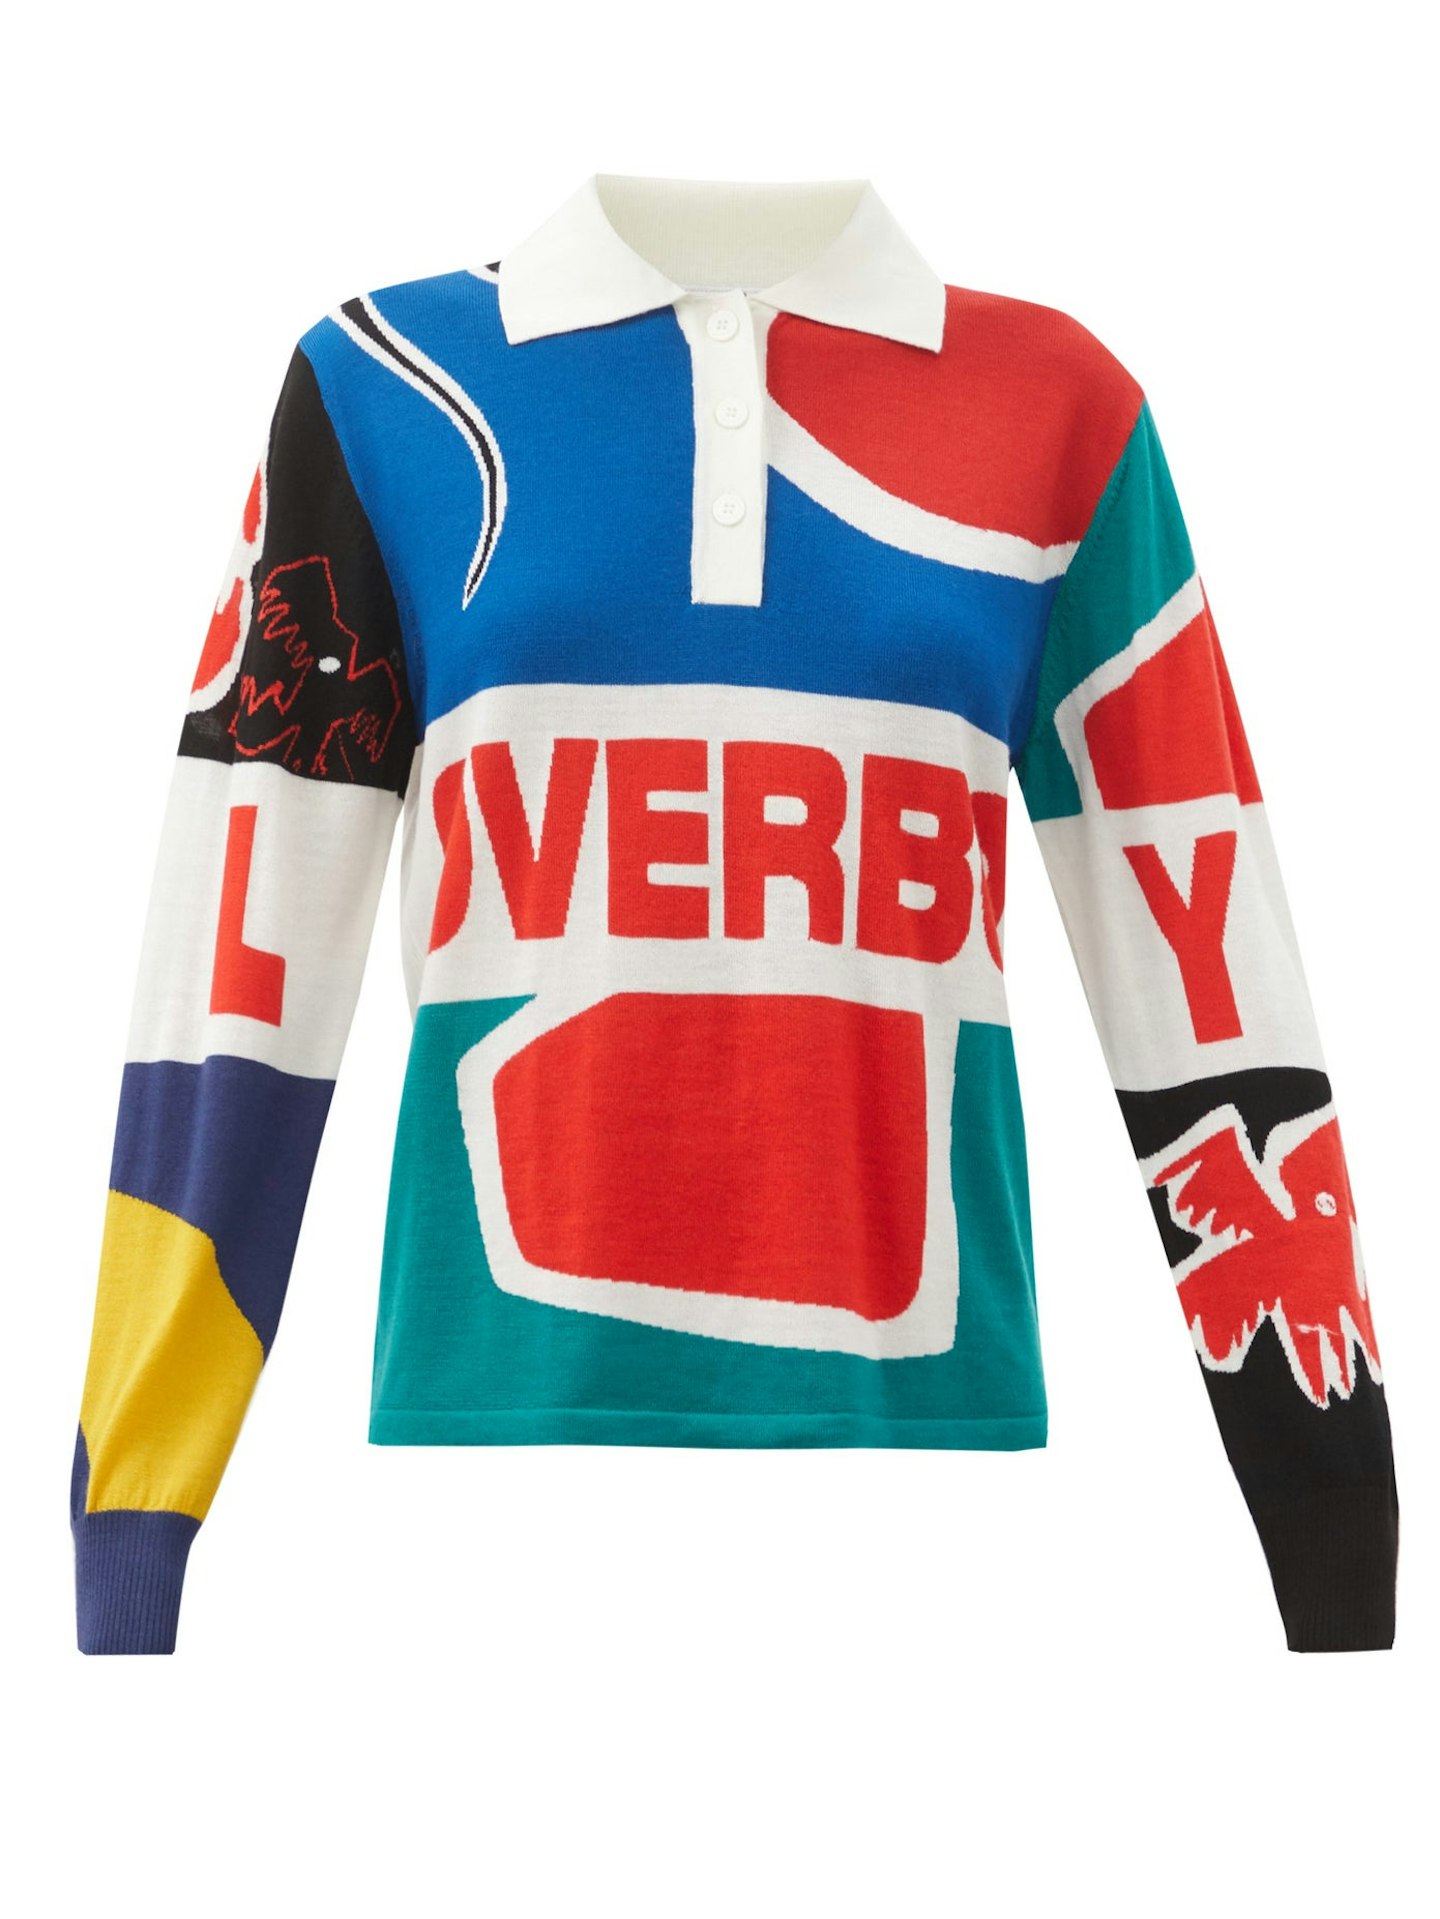 CHARLES JEFFREY LOVERBOY, Art & logo-intarsia merino-wool rugby shirt, £350